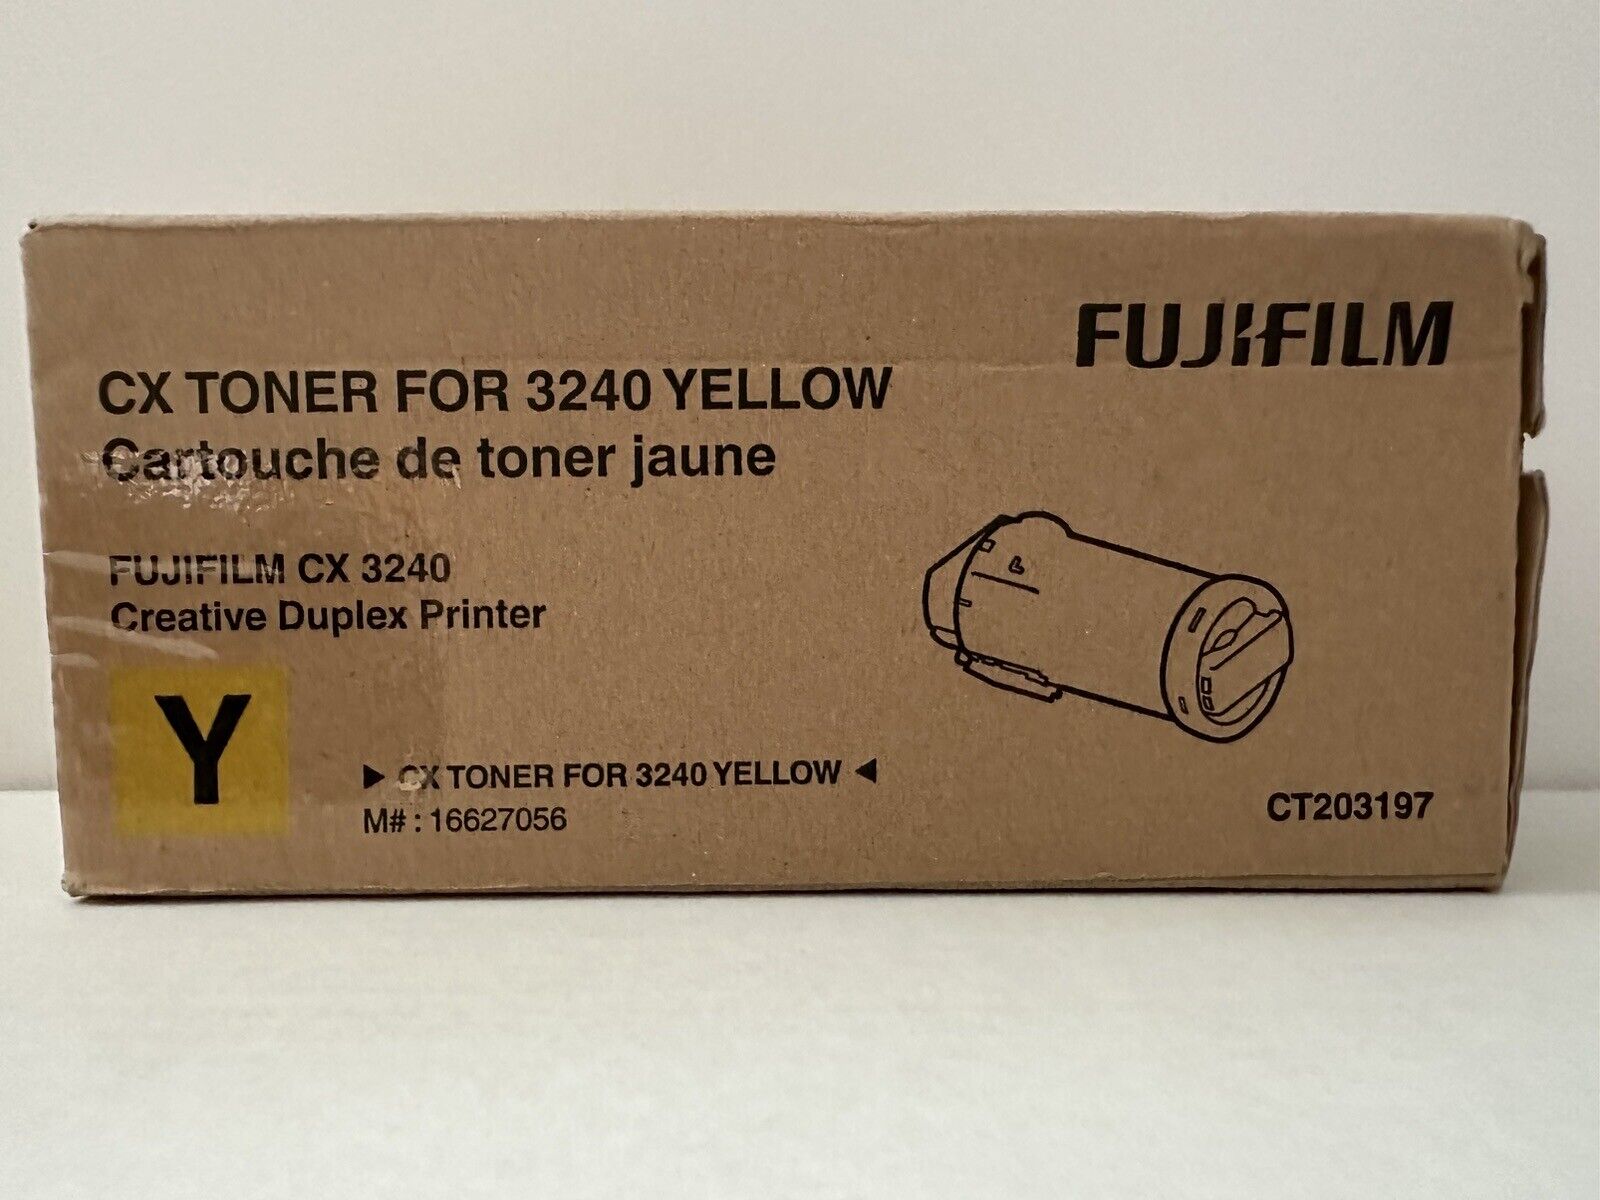 Fujifilm CX Toner For 3240 - Yellow